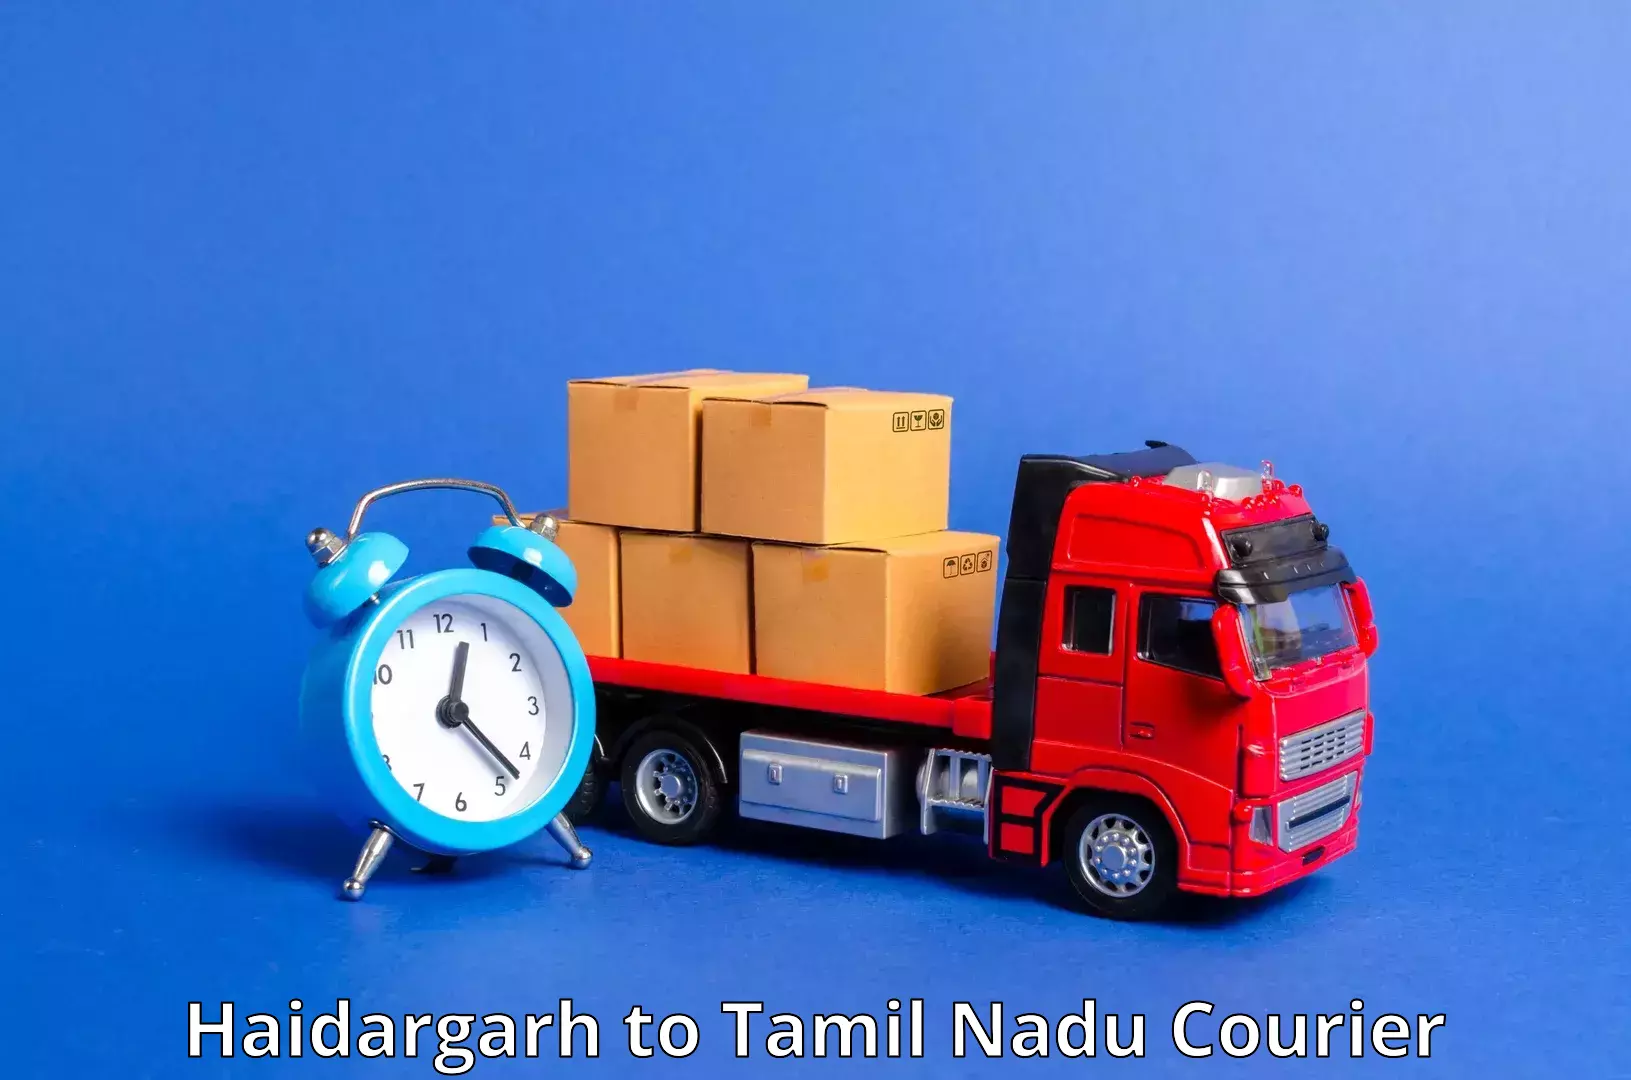 High-speed parcel service Haidargarh to Virudhachalam